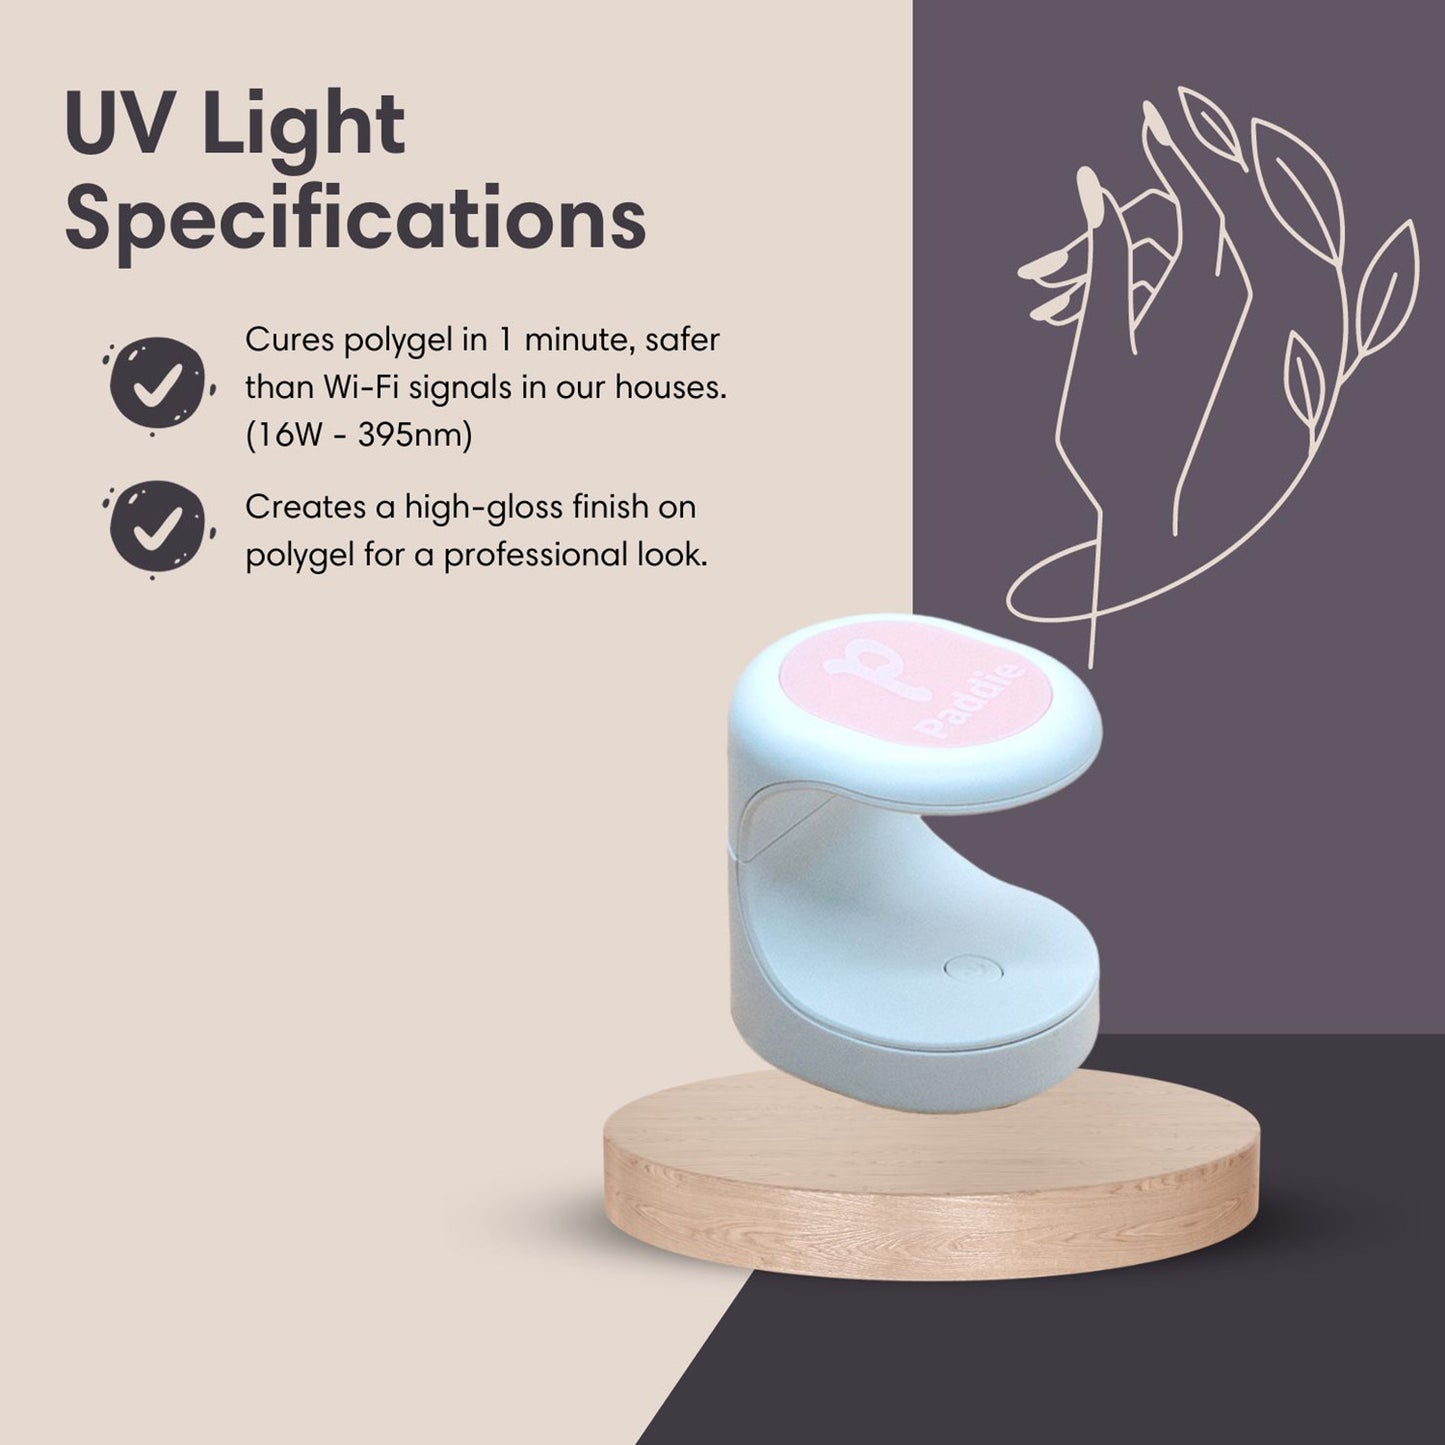 UV Lamp Light for curing